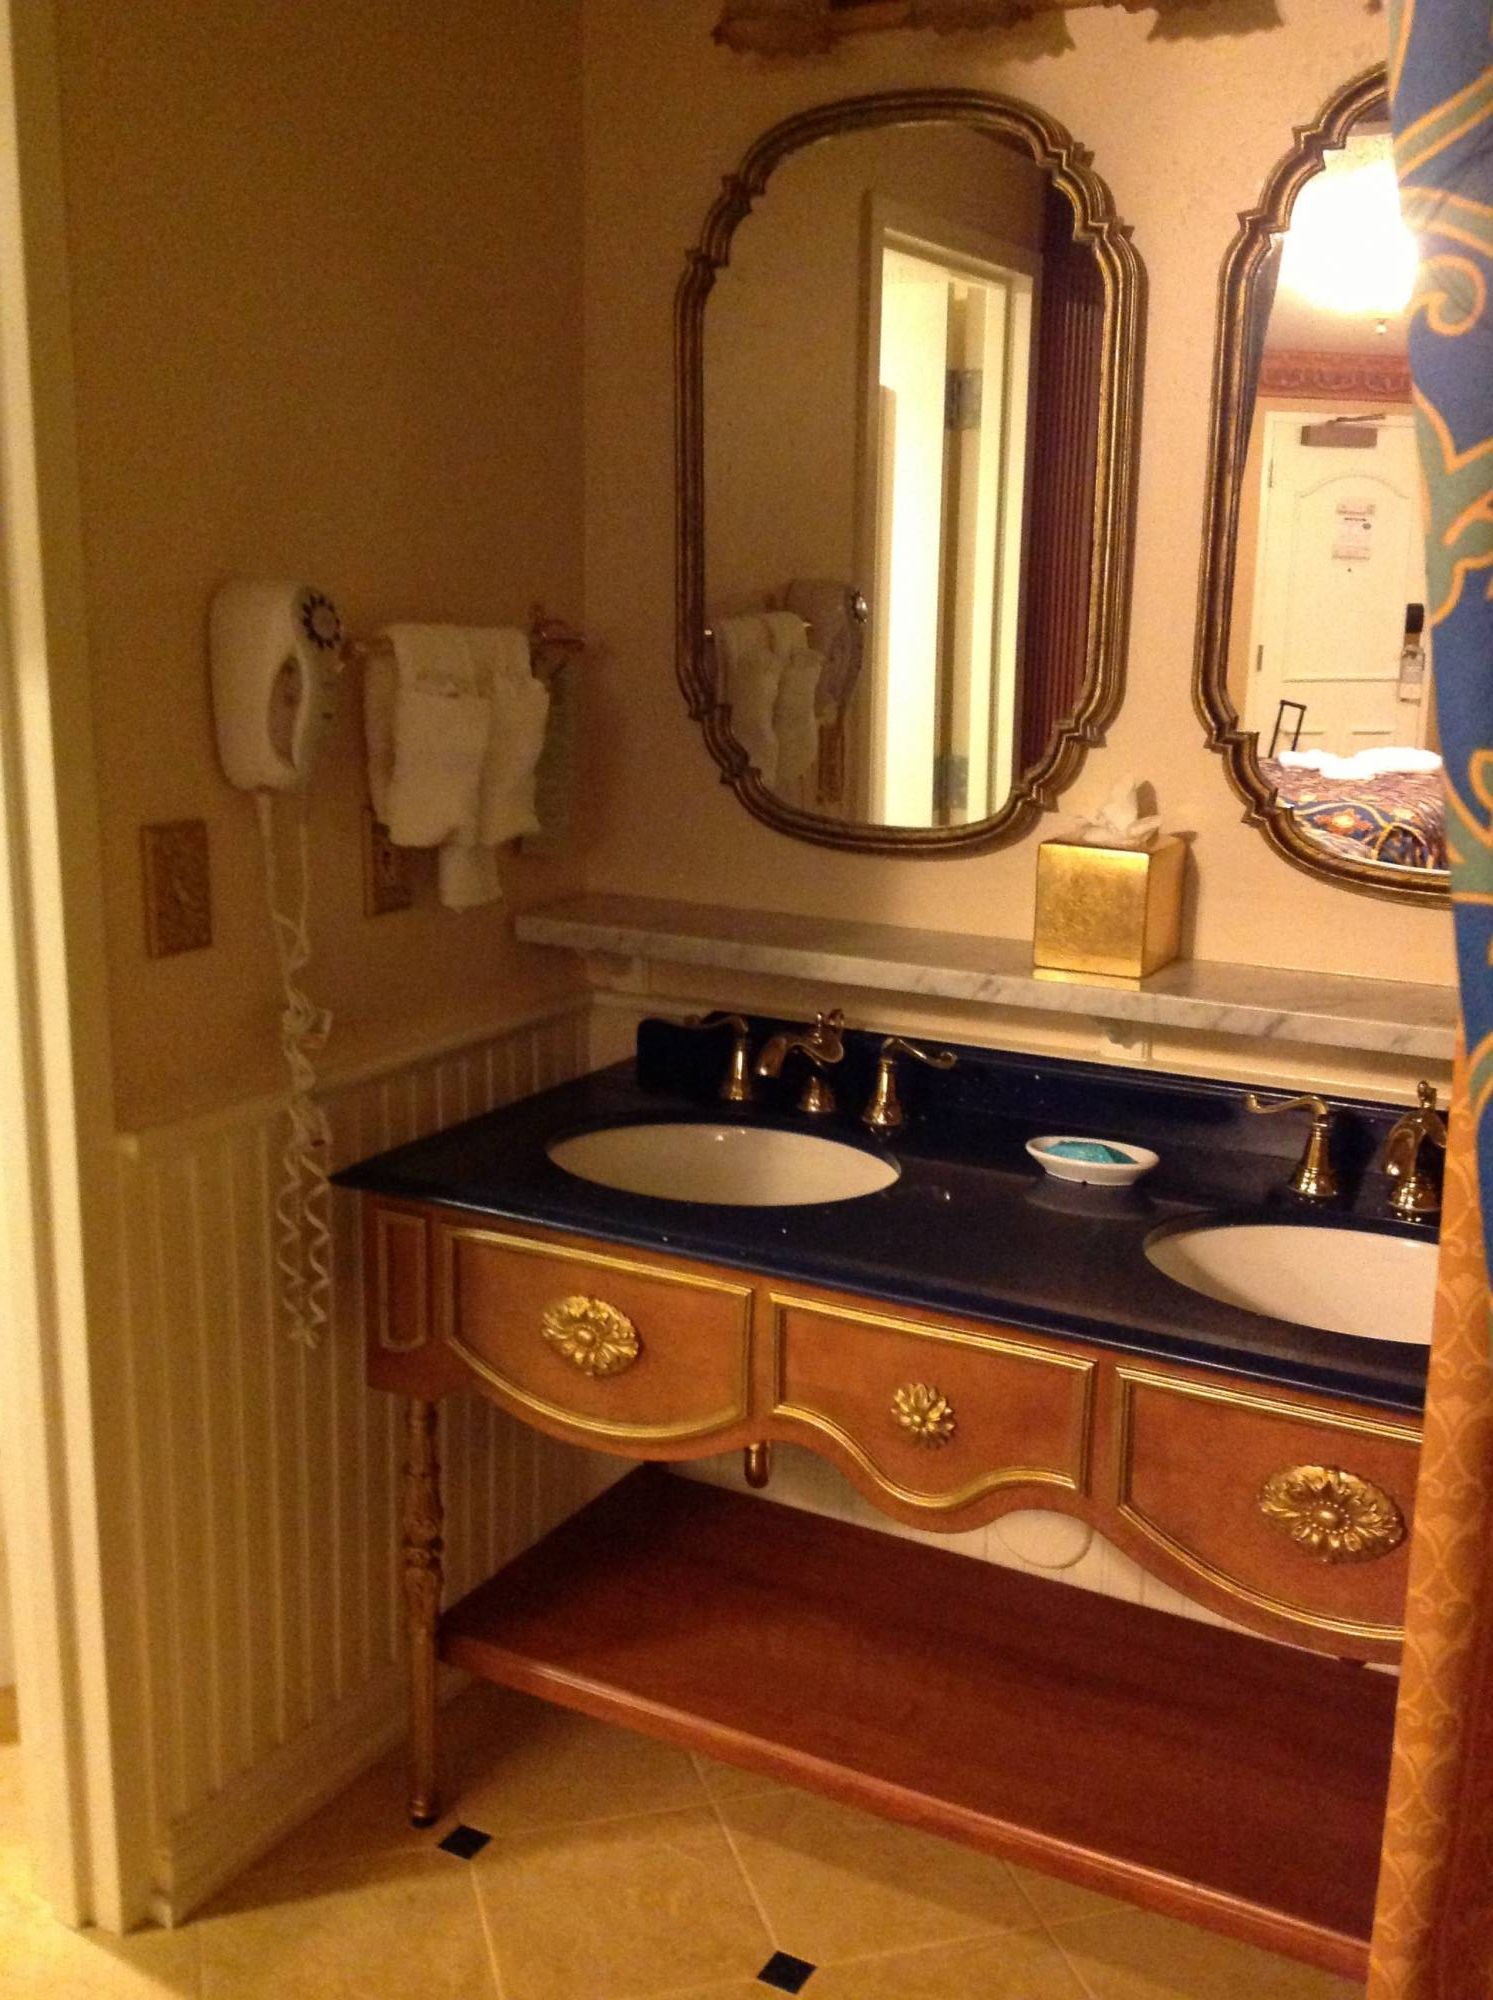 Royal Room Sinks - Port Orleans Riverside